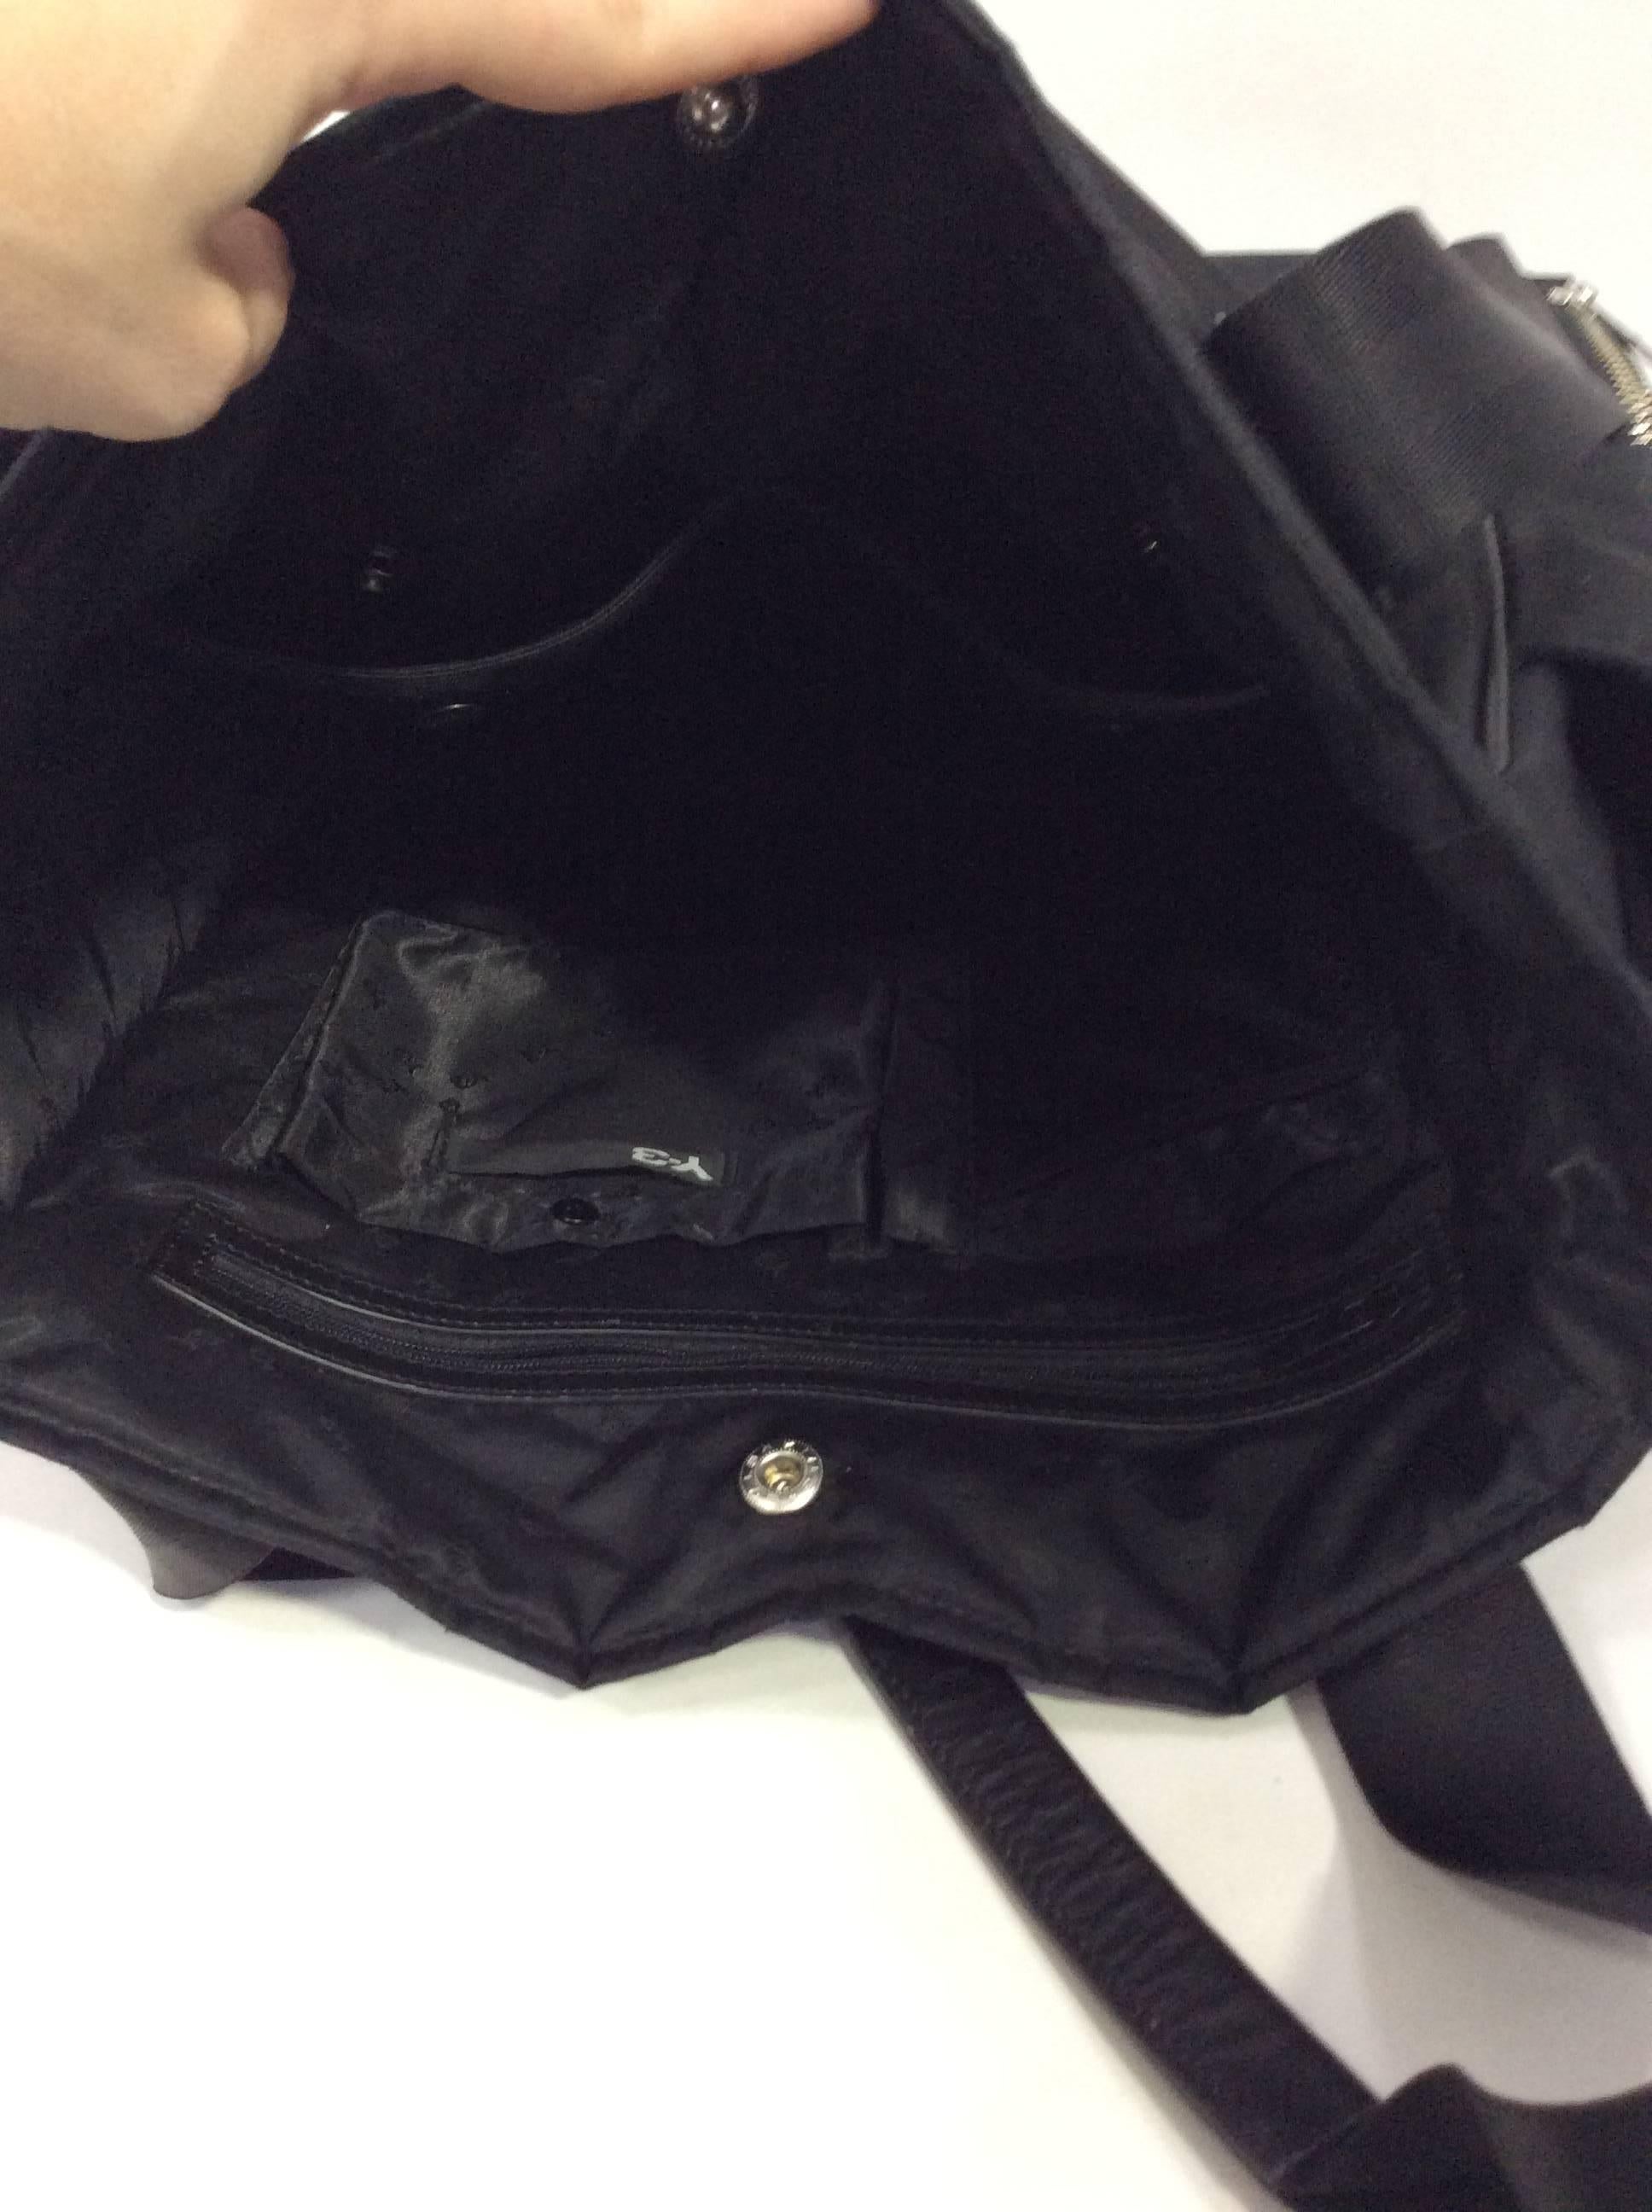 Yohji Yamamoto Multi Pocket Black Handbag In Excellent Condition For Sale In Narberth, PA